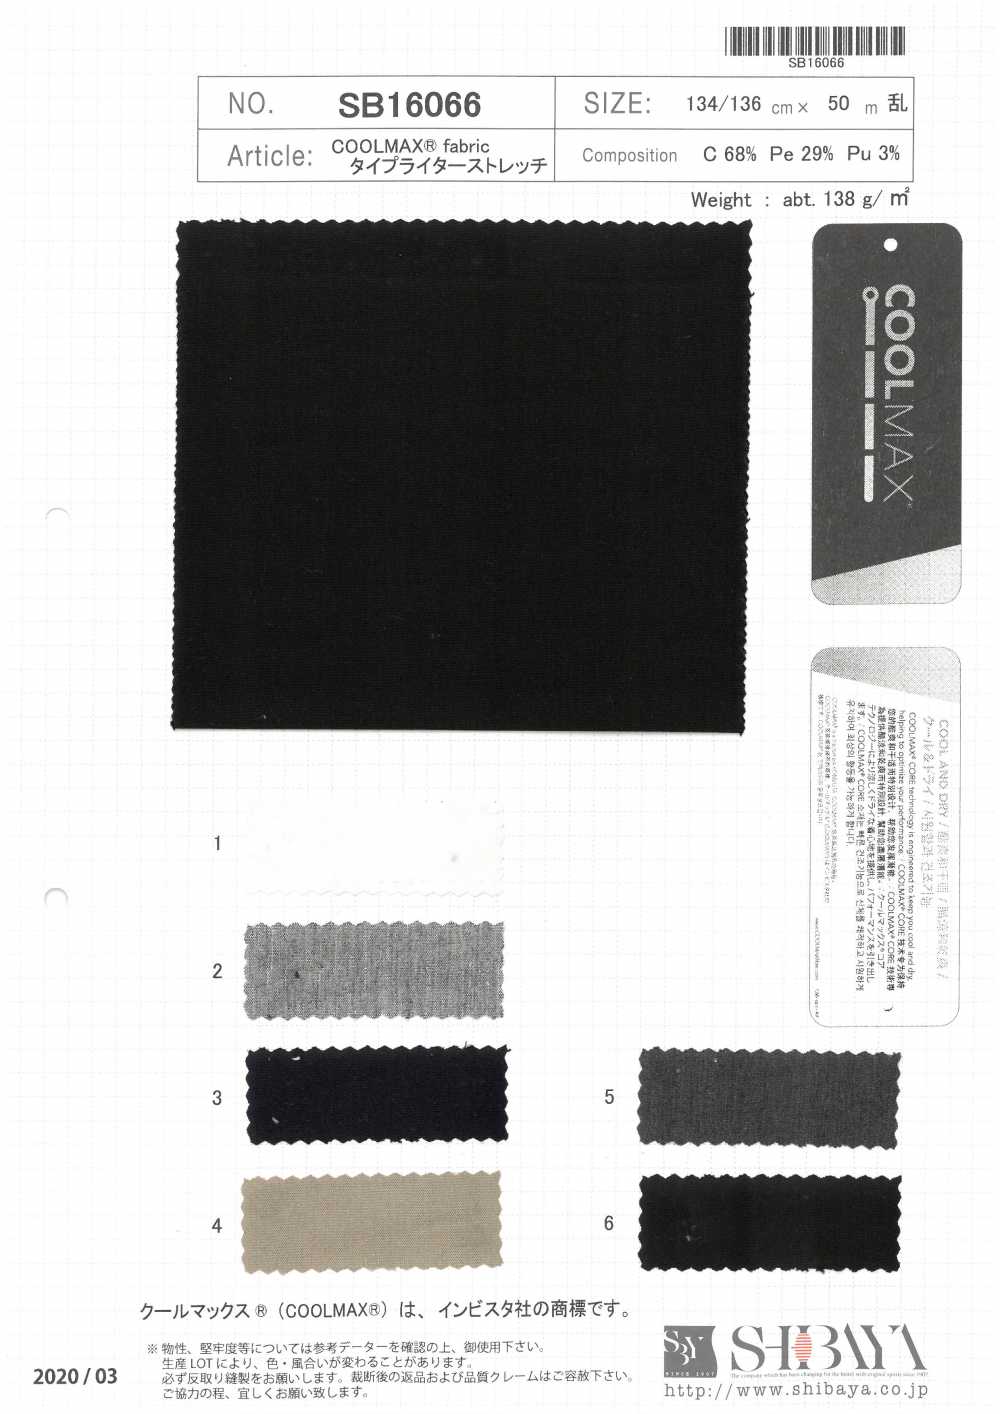 SB16066 COOLMAX® fabric 타이프라이터 스트레칭[원단] SHIBAYA